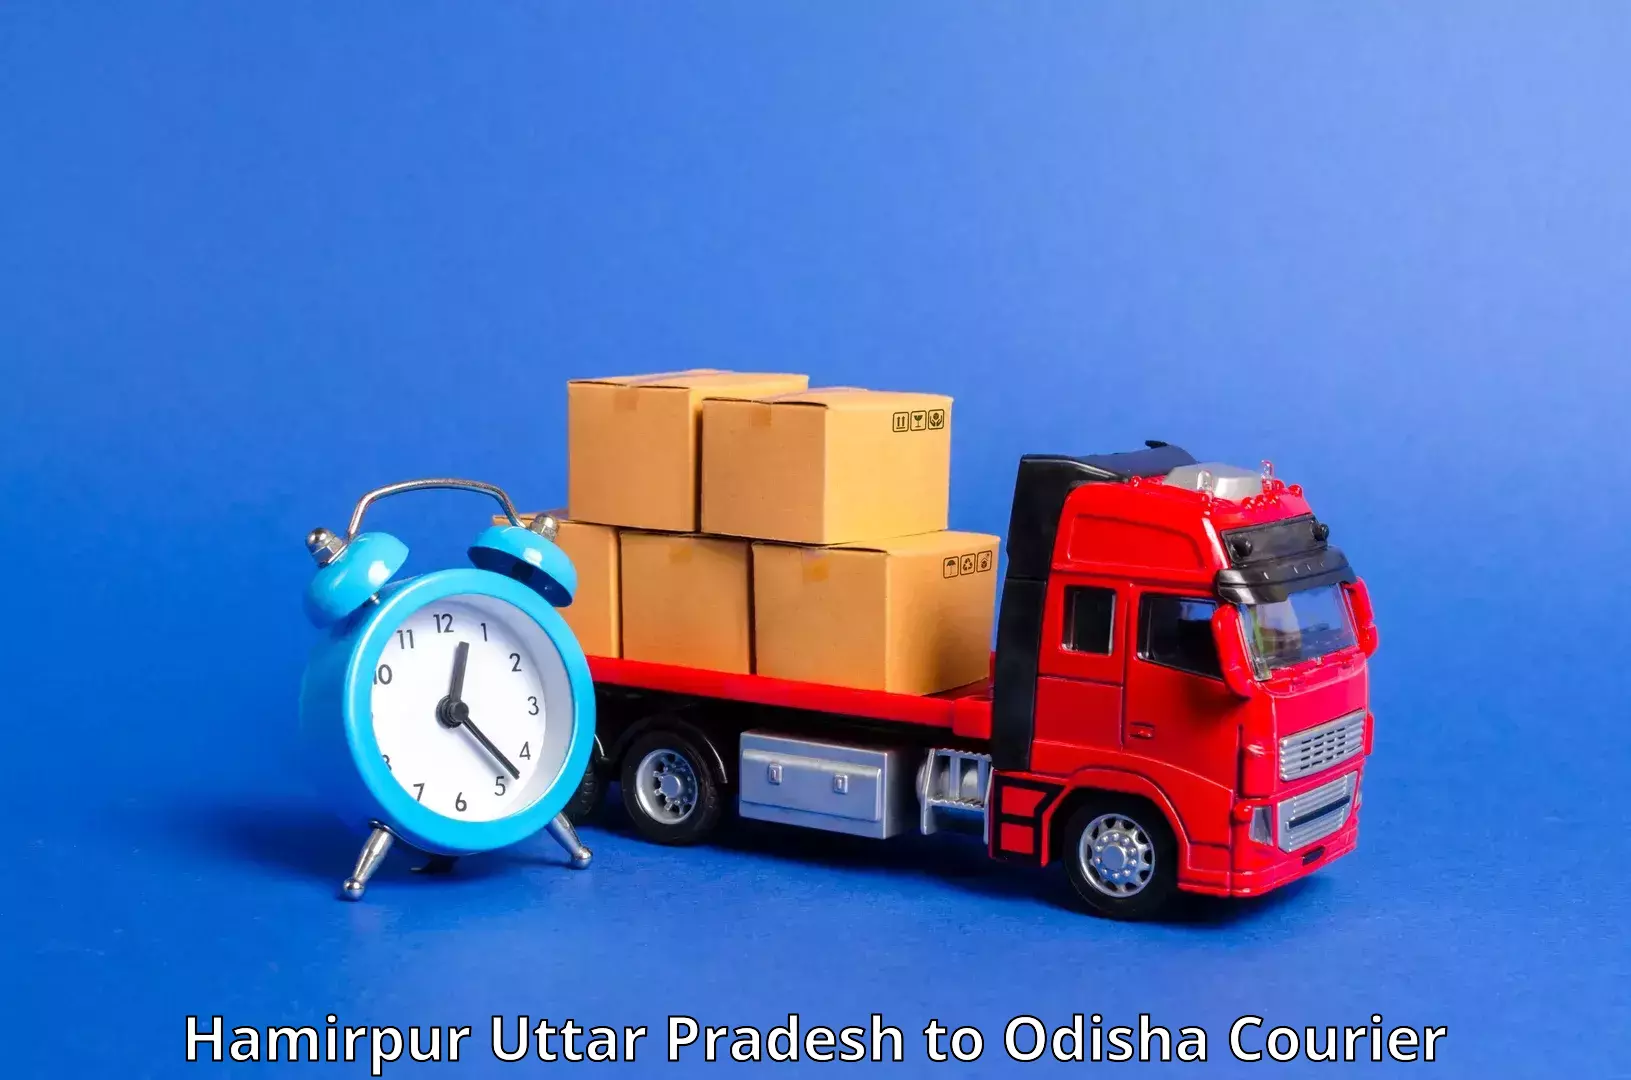 Flexible delivery schedules Hamirpur Uttar Pradesh to Dandisahi